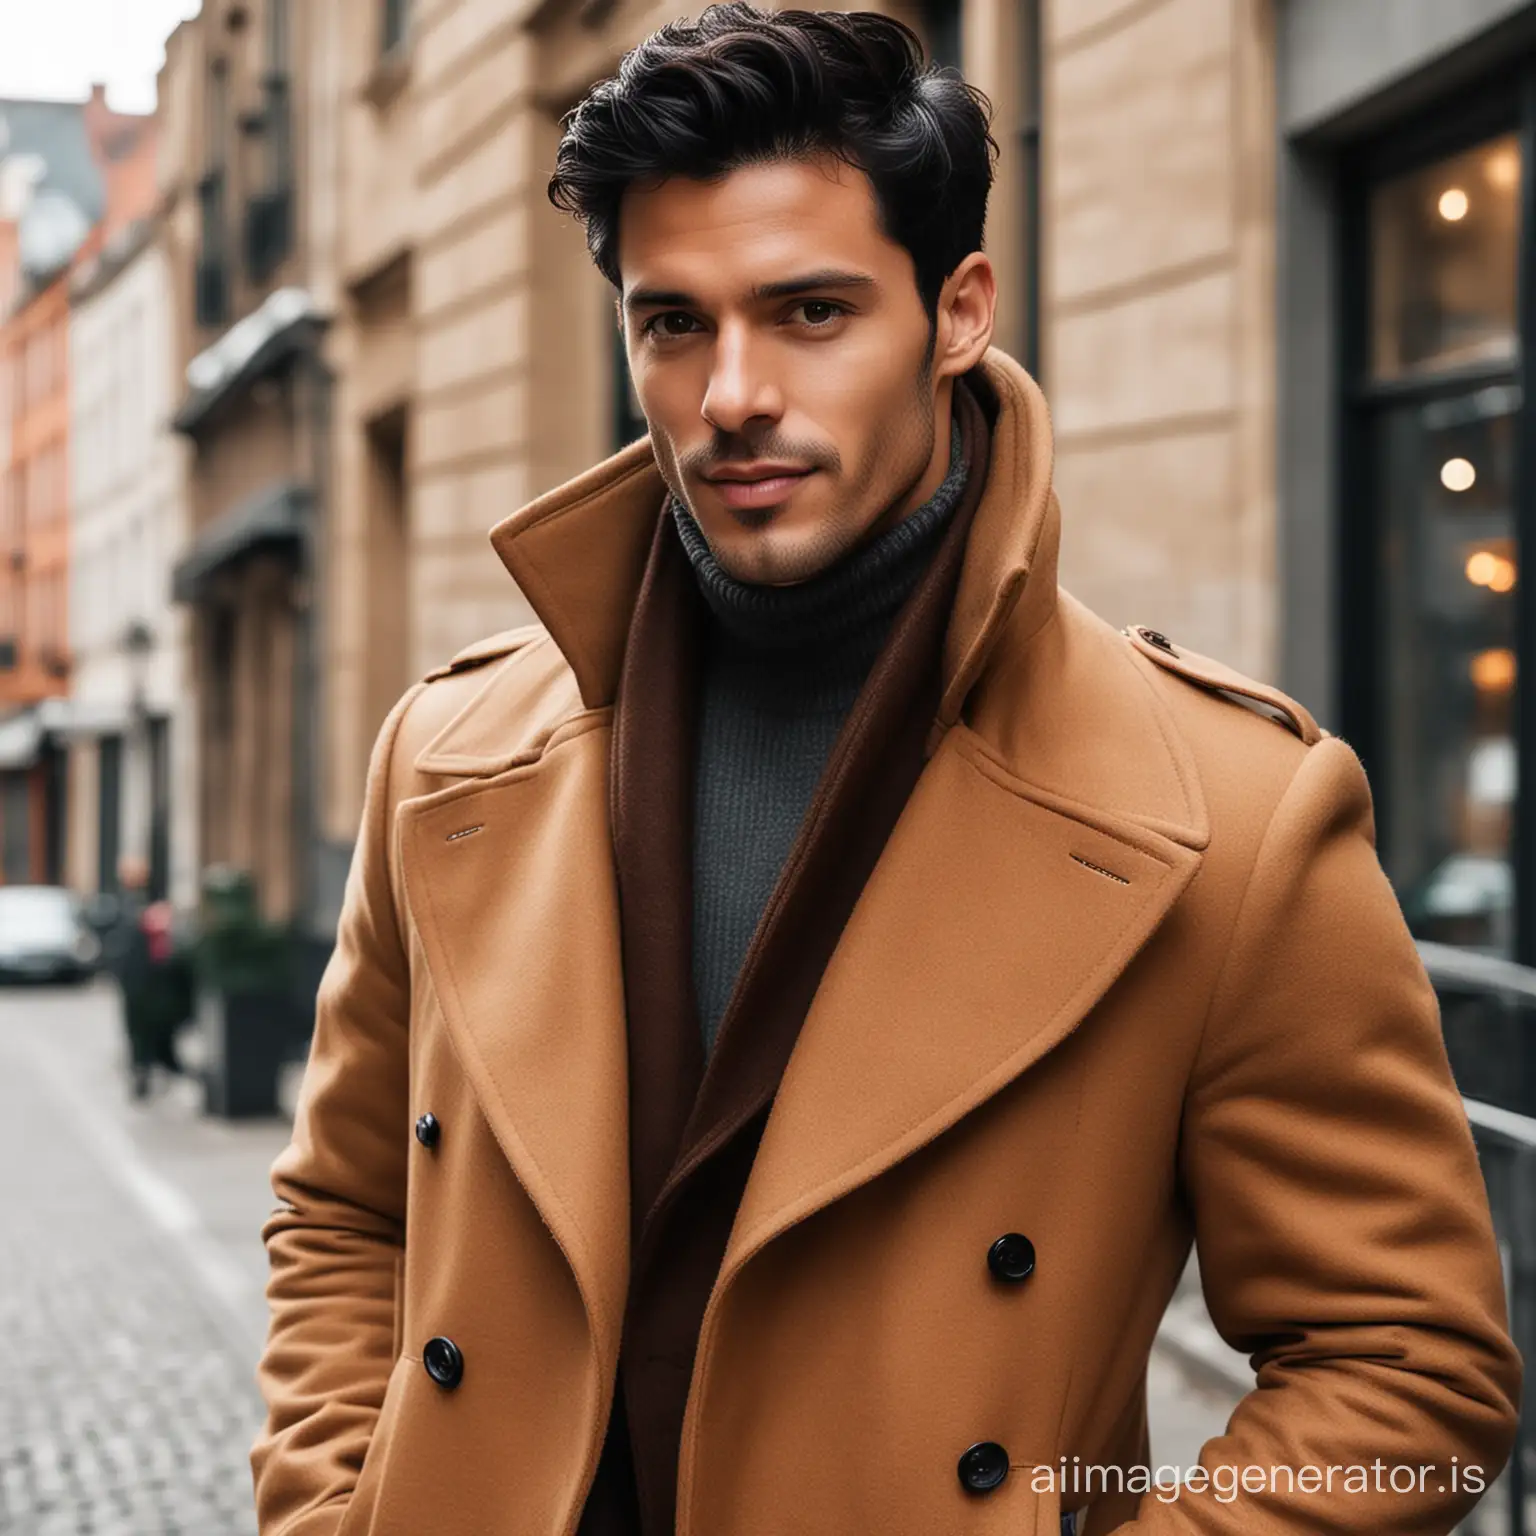 A stylish black hair man in coffe brown coat